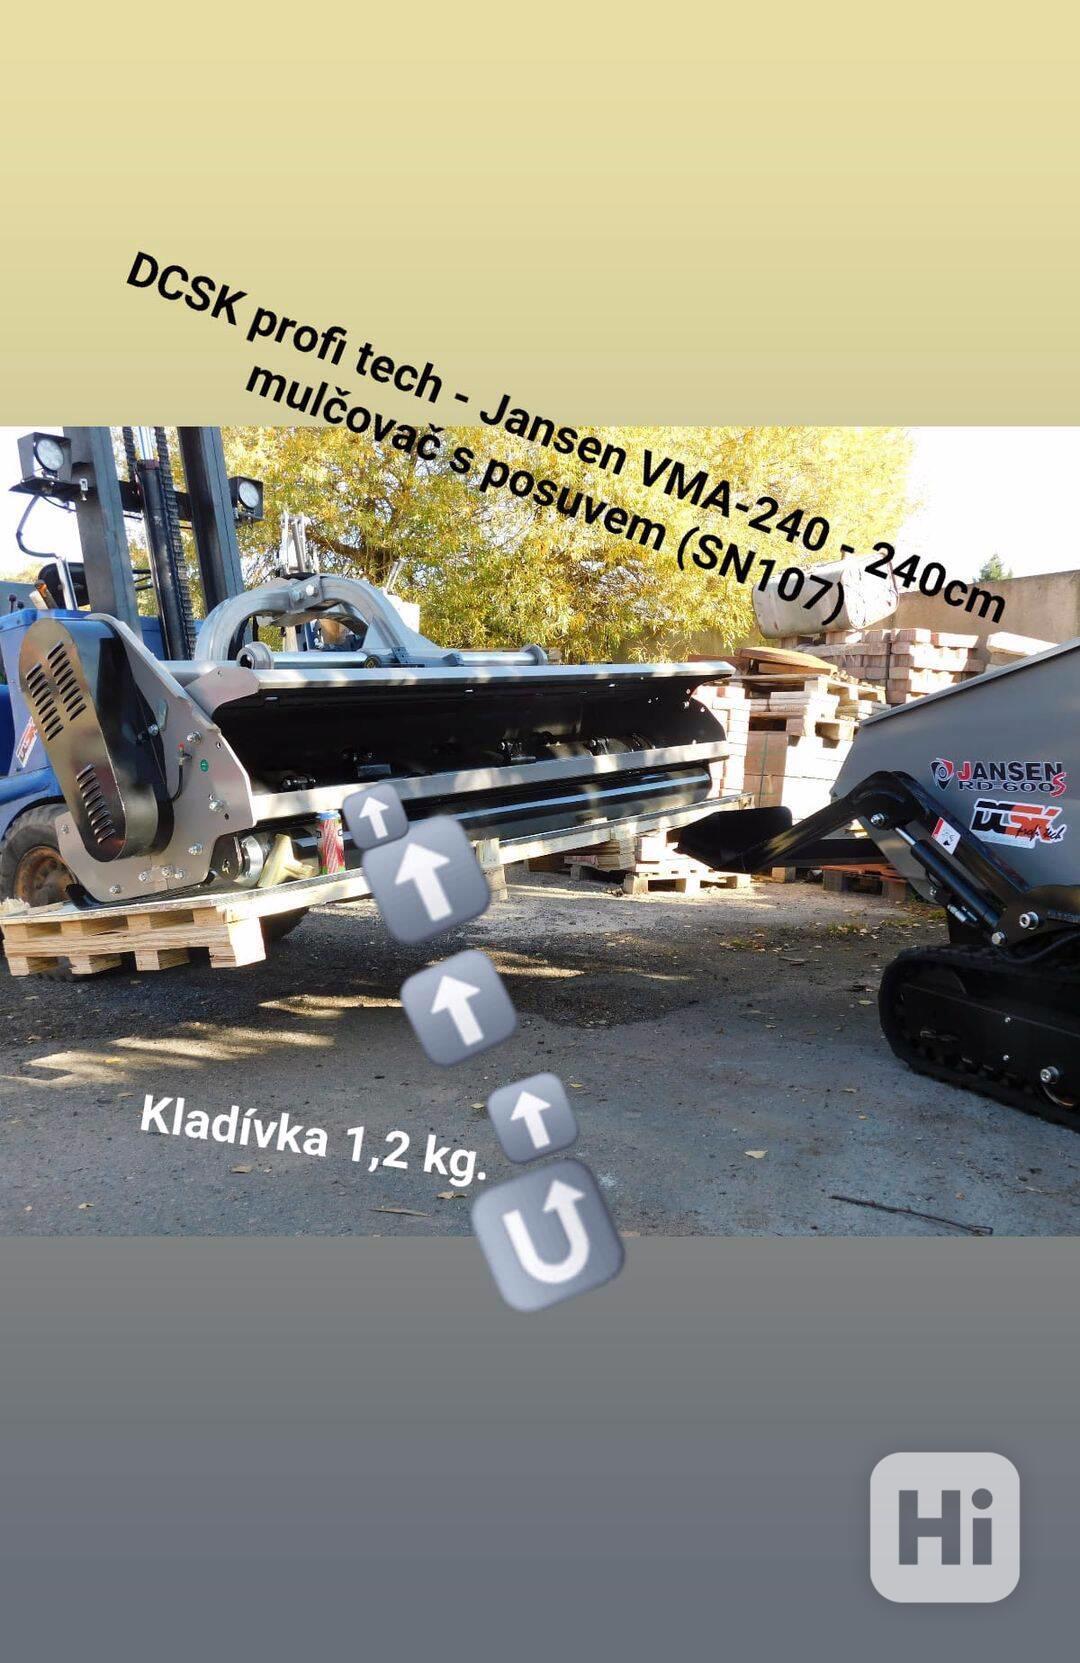 DCSK profi tech - Jansen VMA-240 - 240cm mulčovač s posuvem  - foto 1